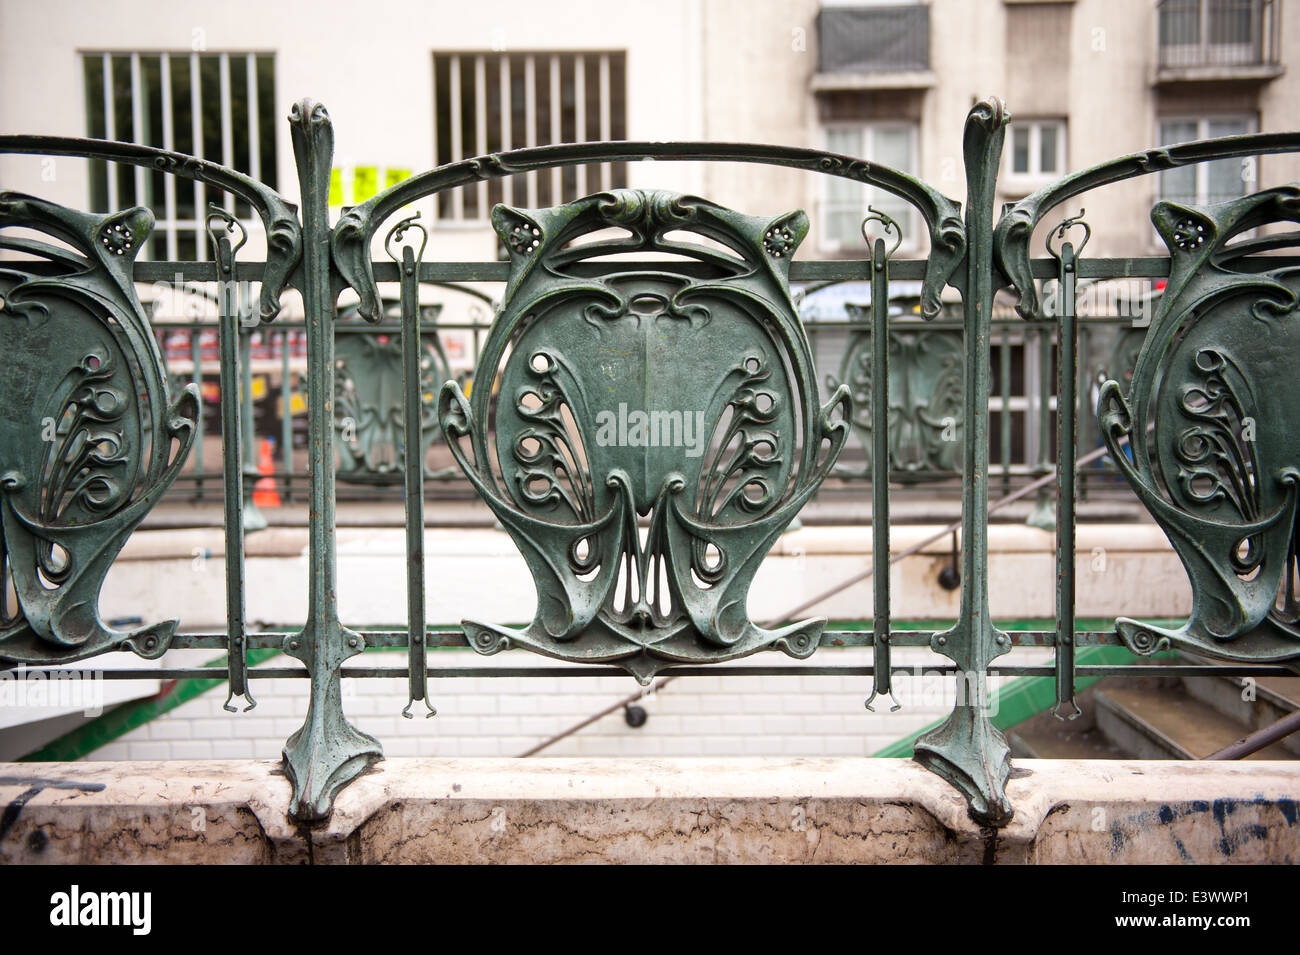 ironwork railings of the metropolitain metro station of pigalle, paris, france Stock Photo